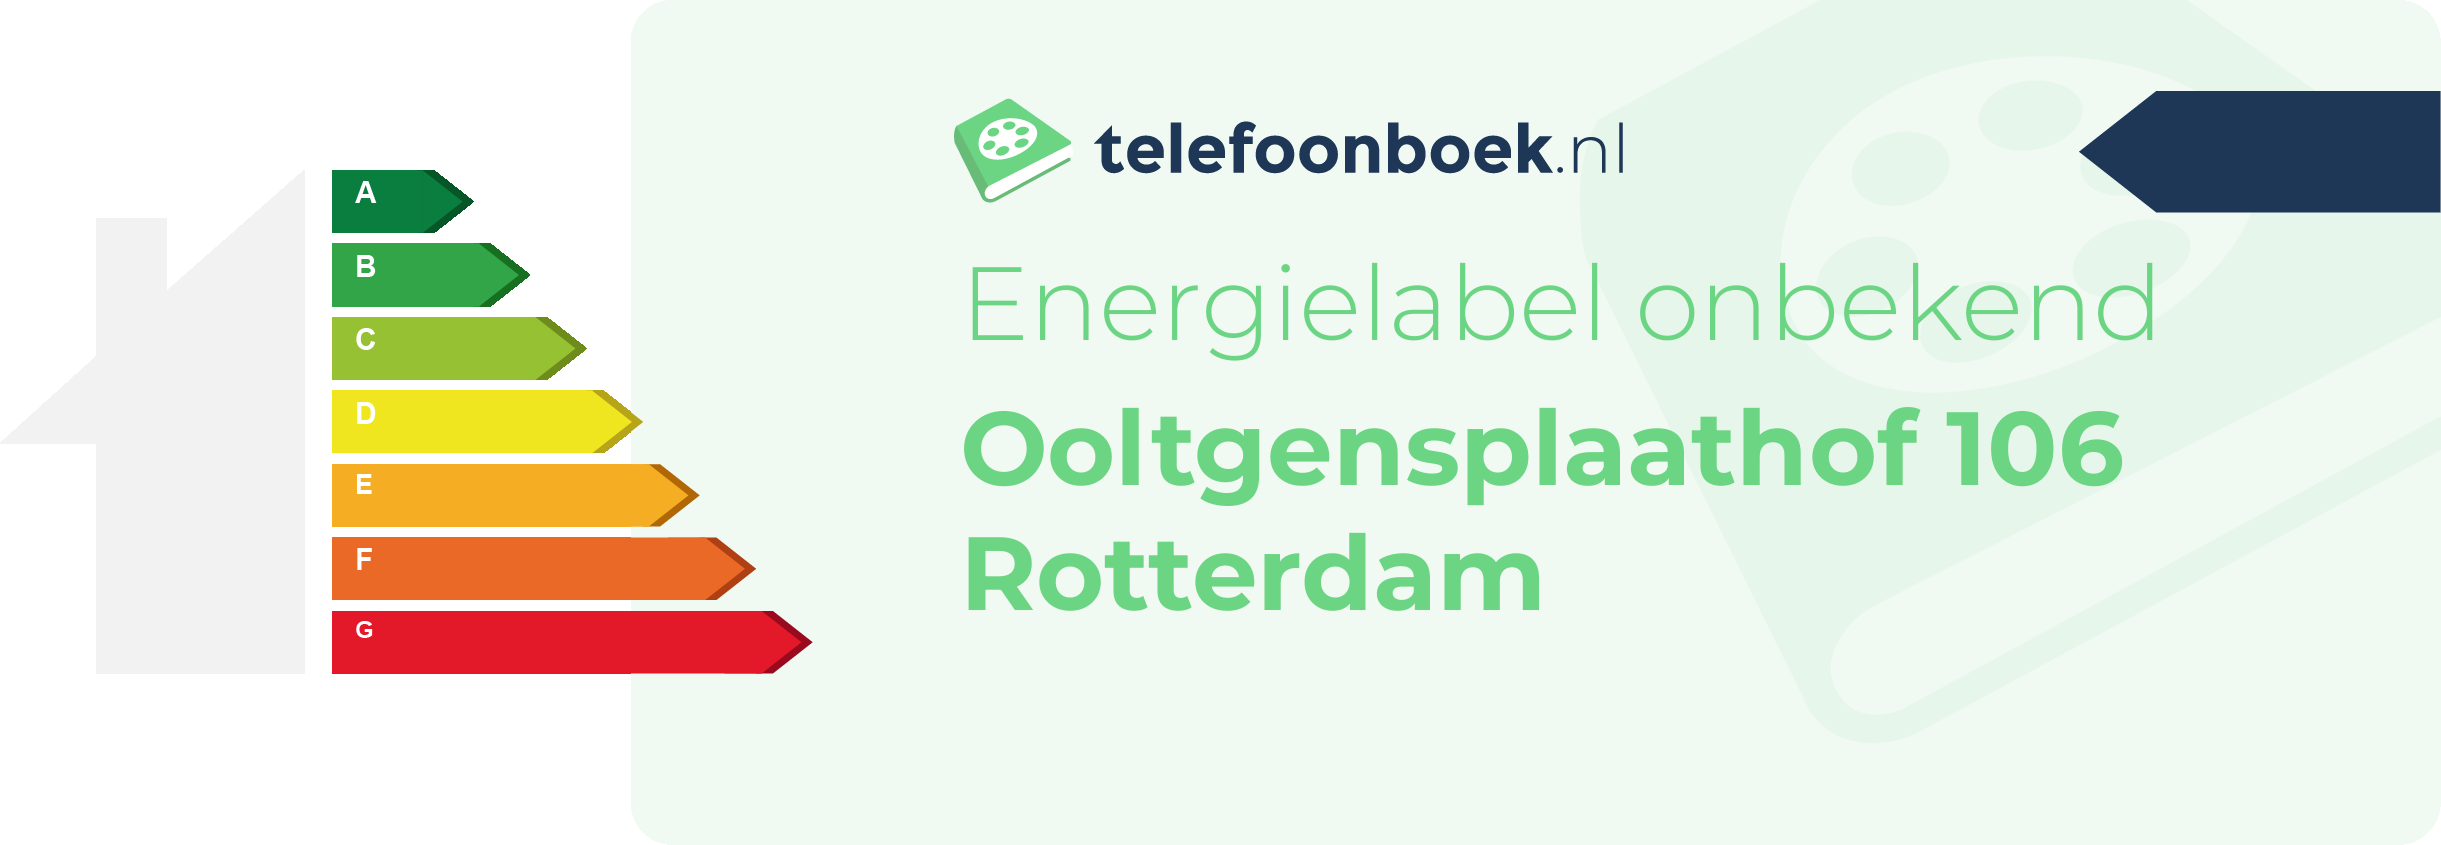 Energielabel Ooltgensplaathof 106 Rotterdam